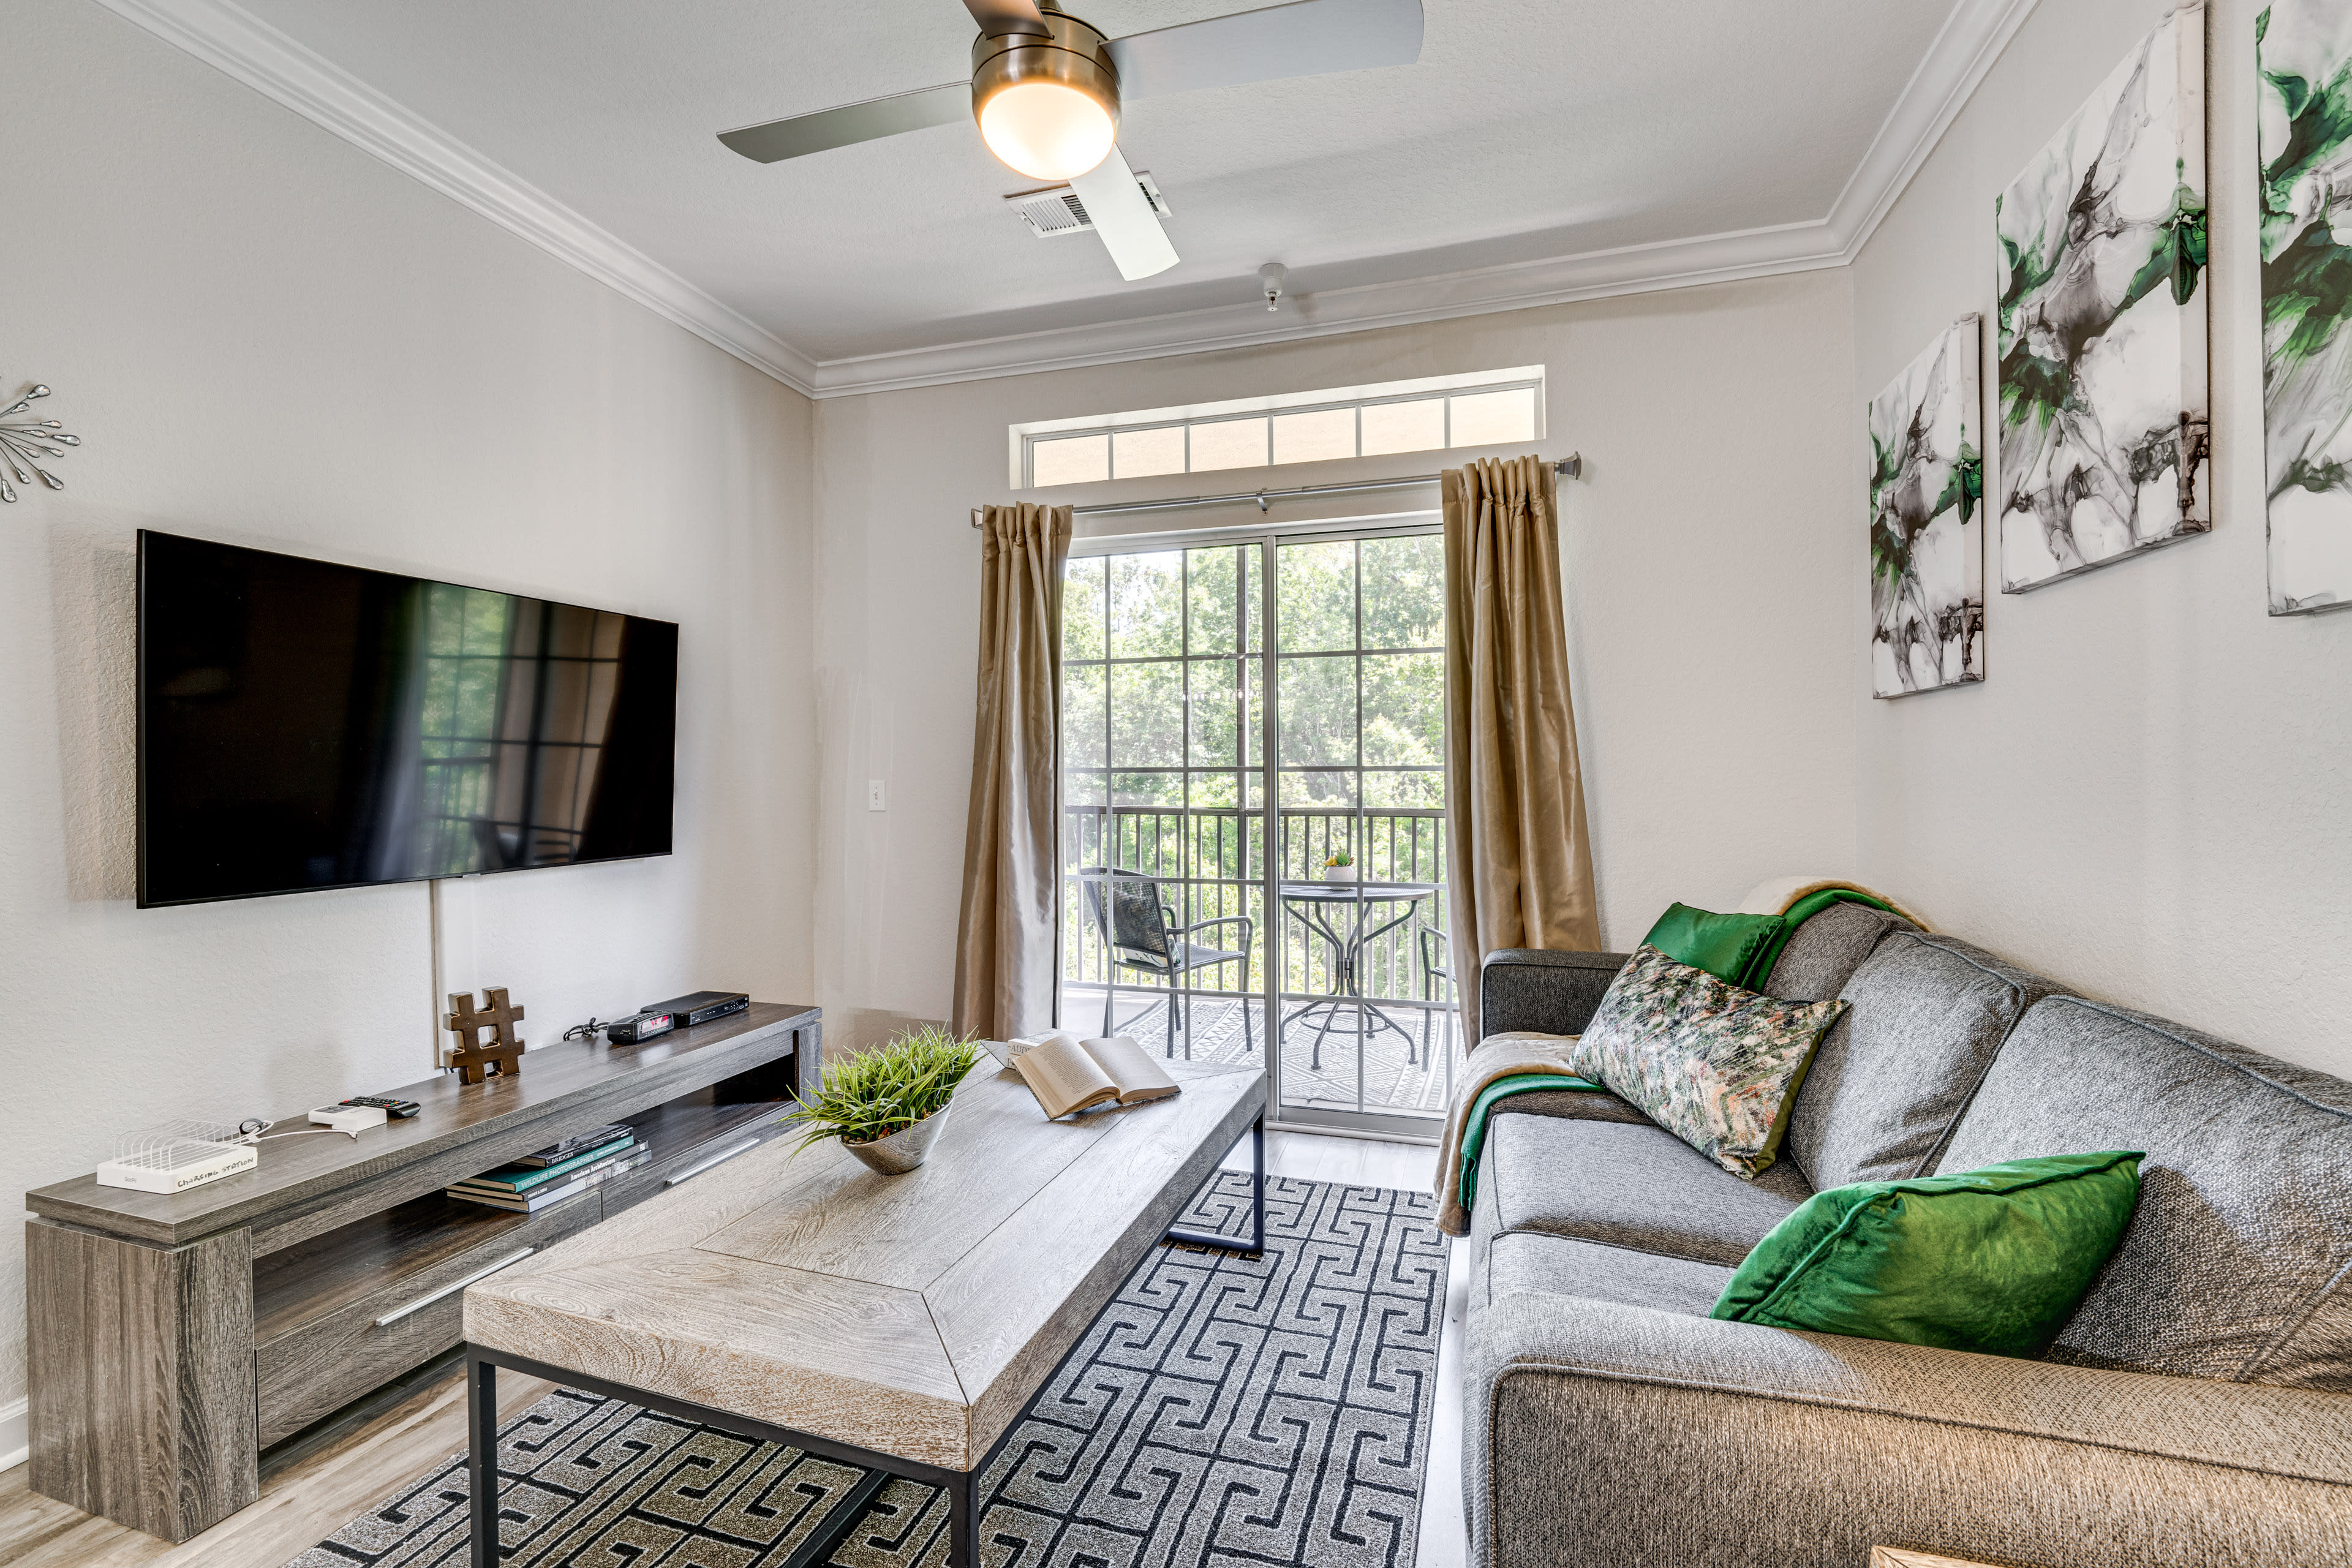 Living Room | Queen Sleeper Sofa | Central Heating & A/C | Smart TV